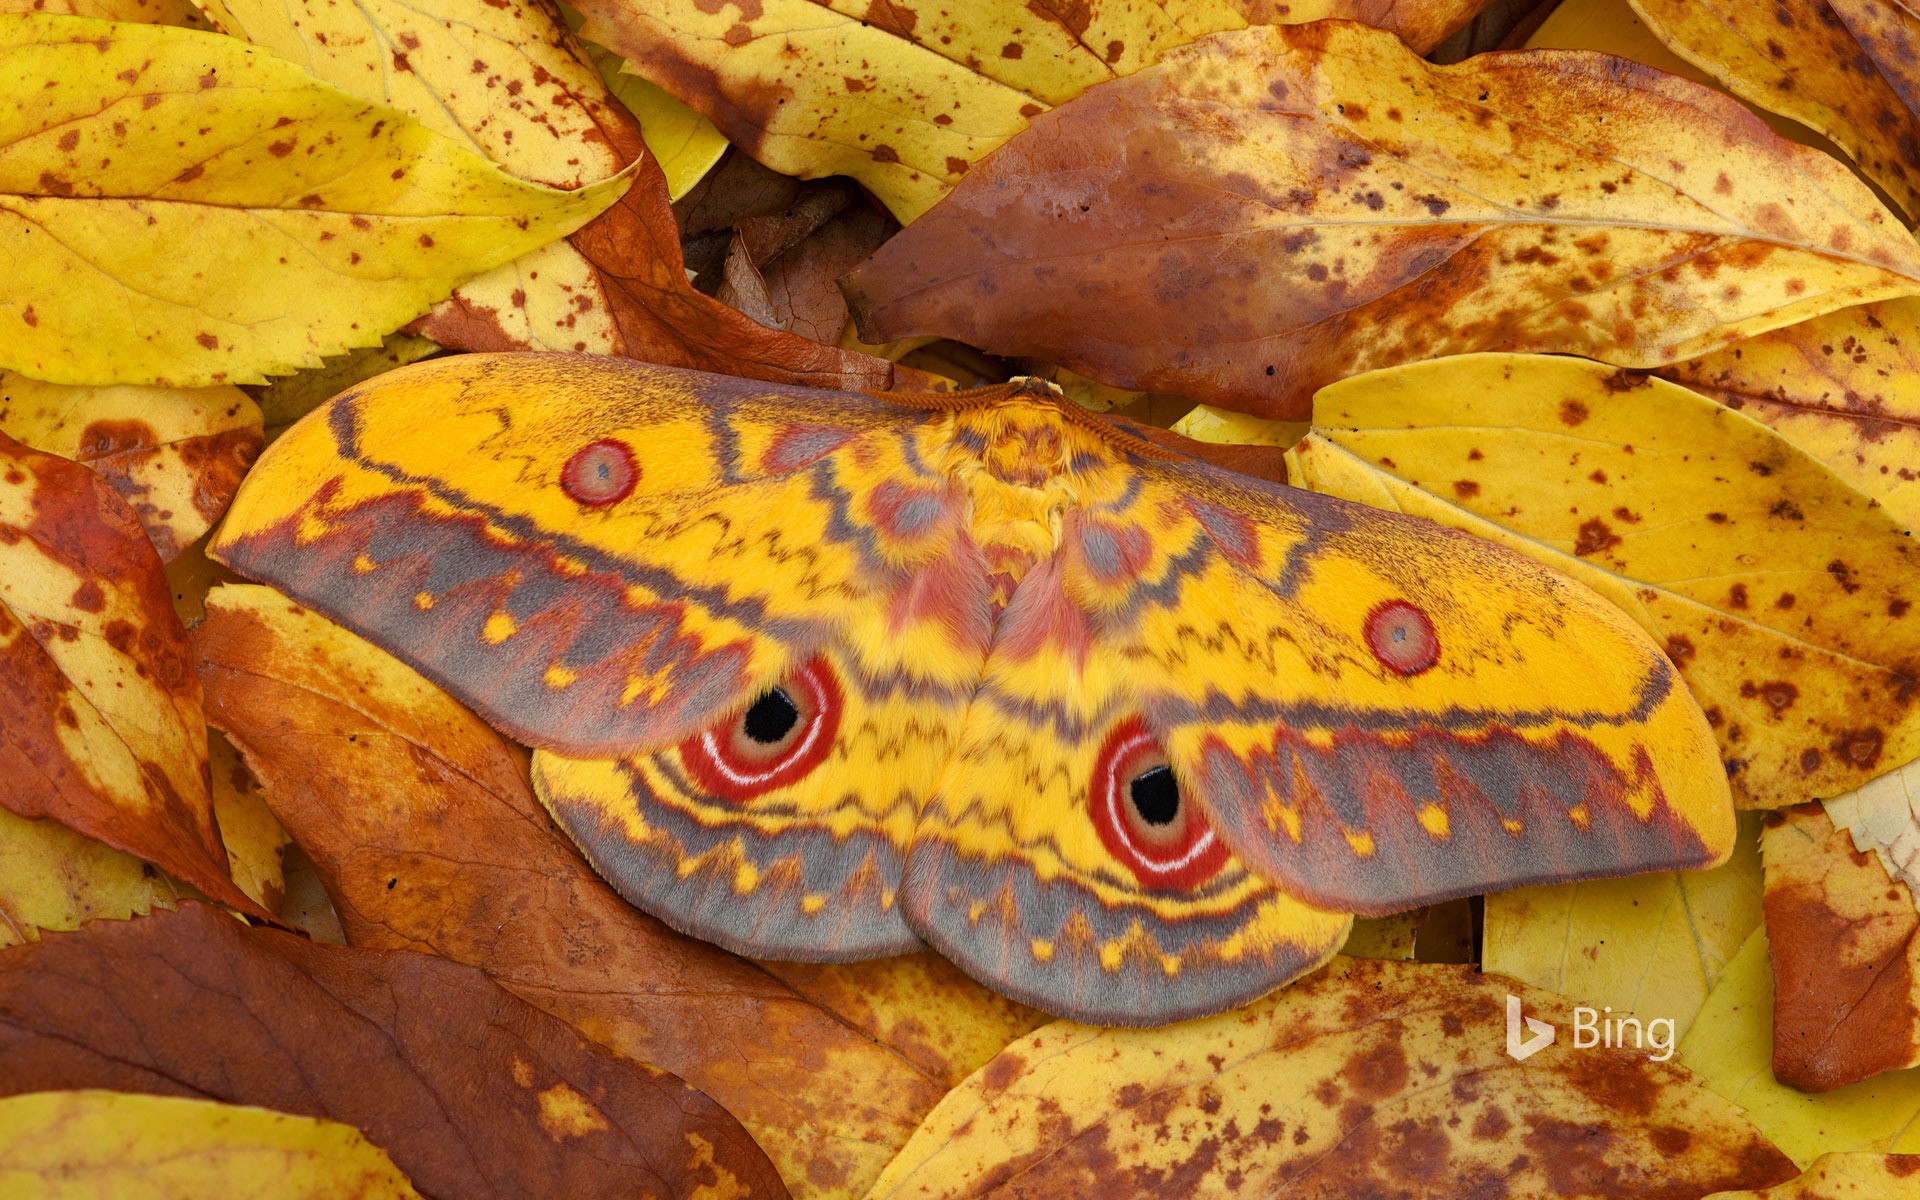 A saturniid moth in Mole National Park, Larabanga, Ghana